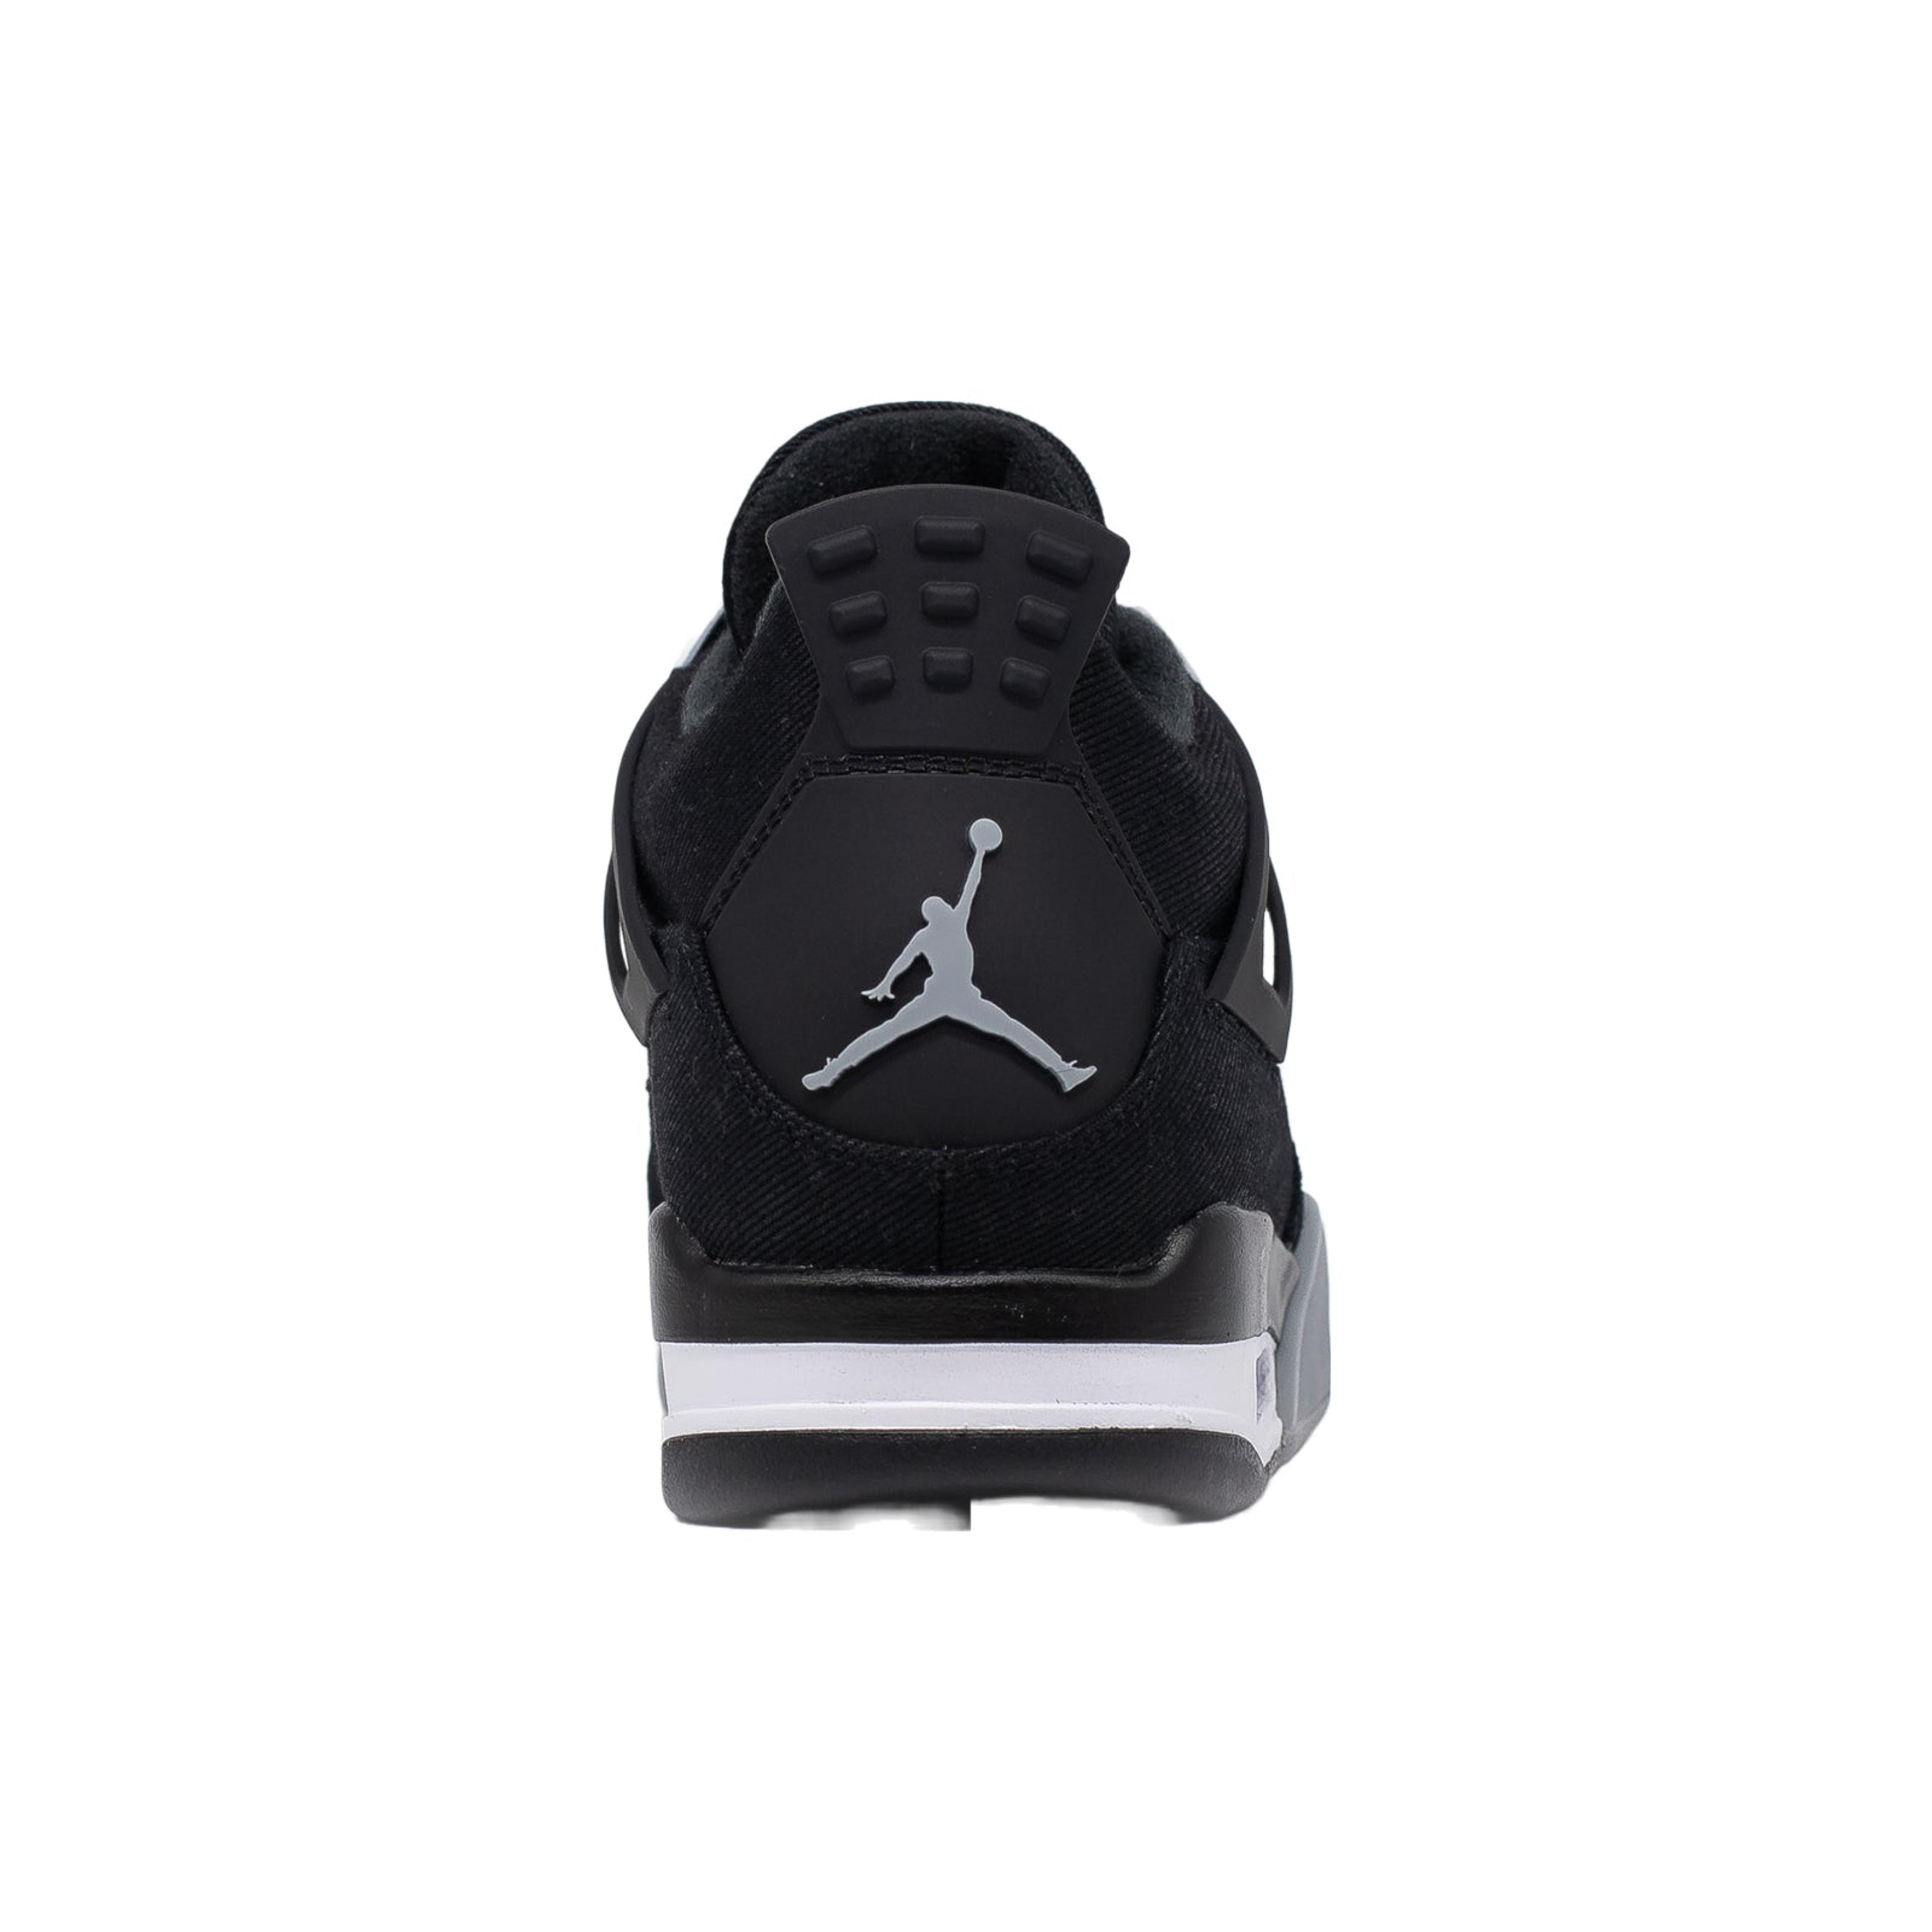 Alternate View 3 of Air Jordan 4, Black Canvas